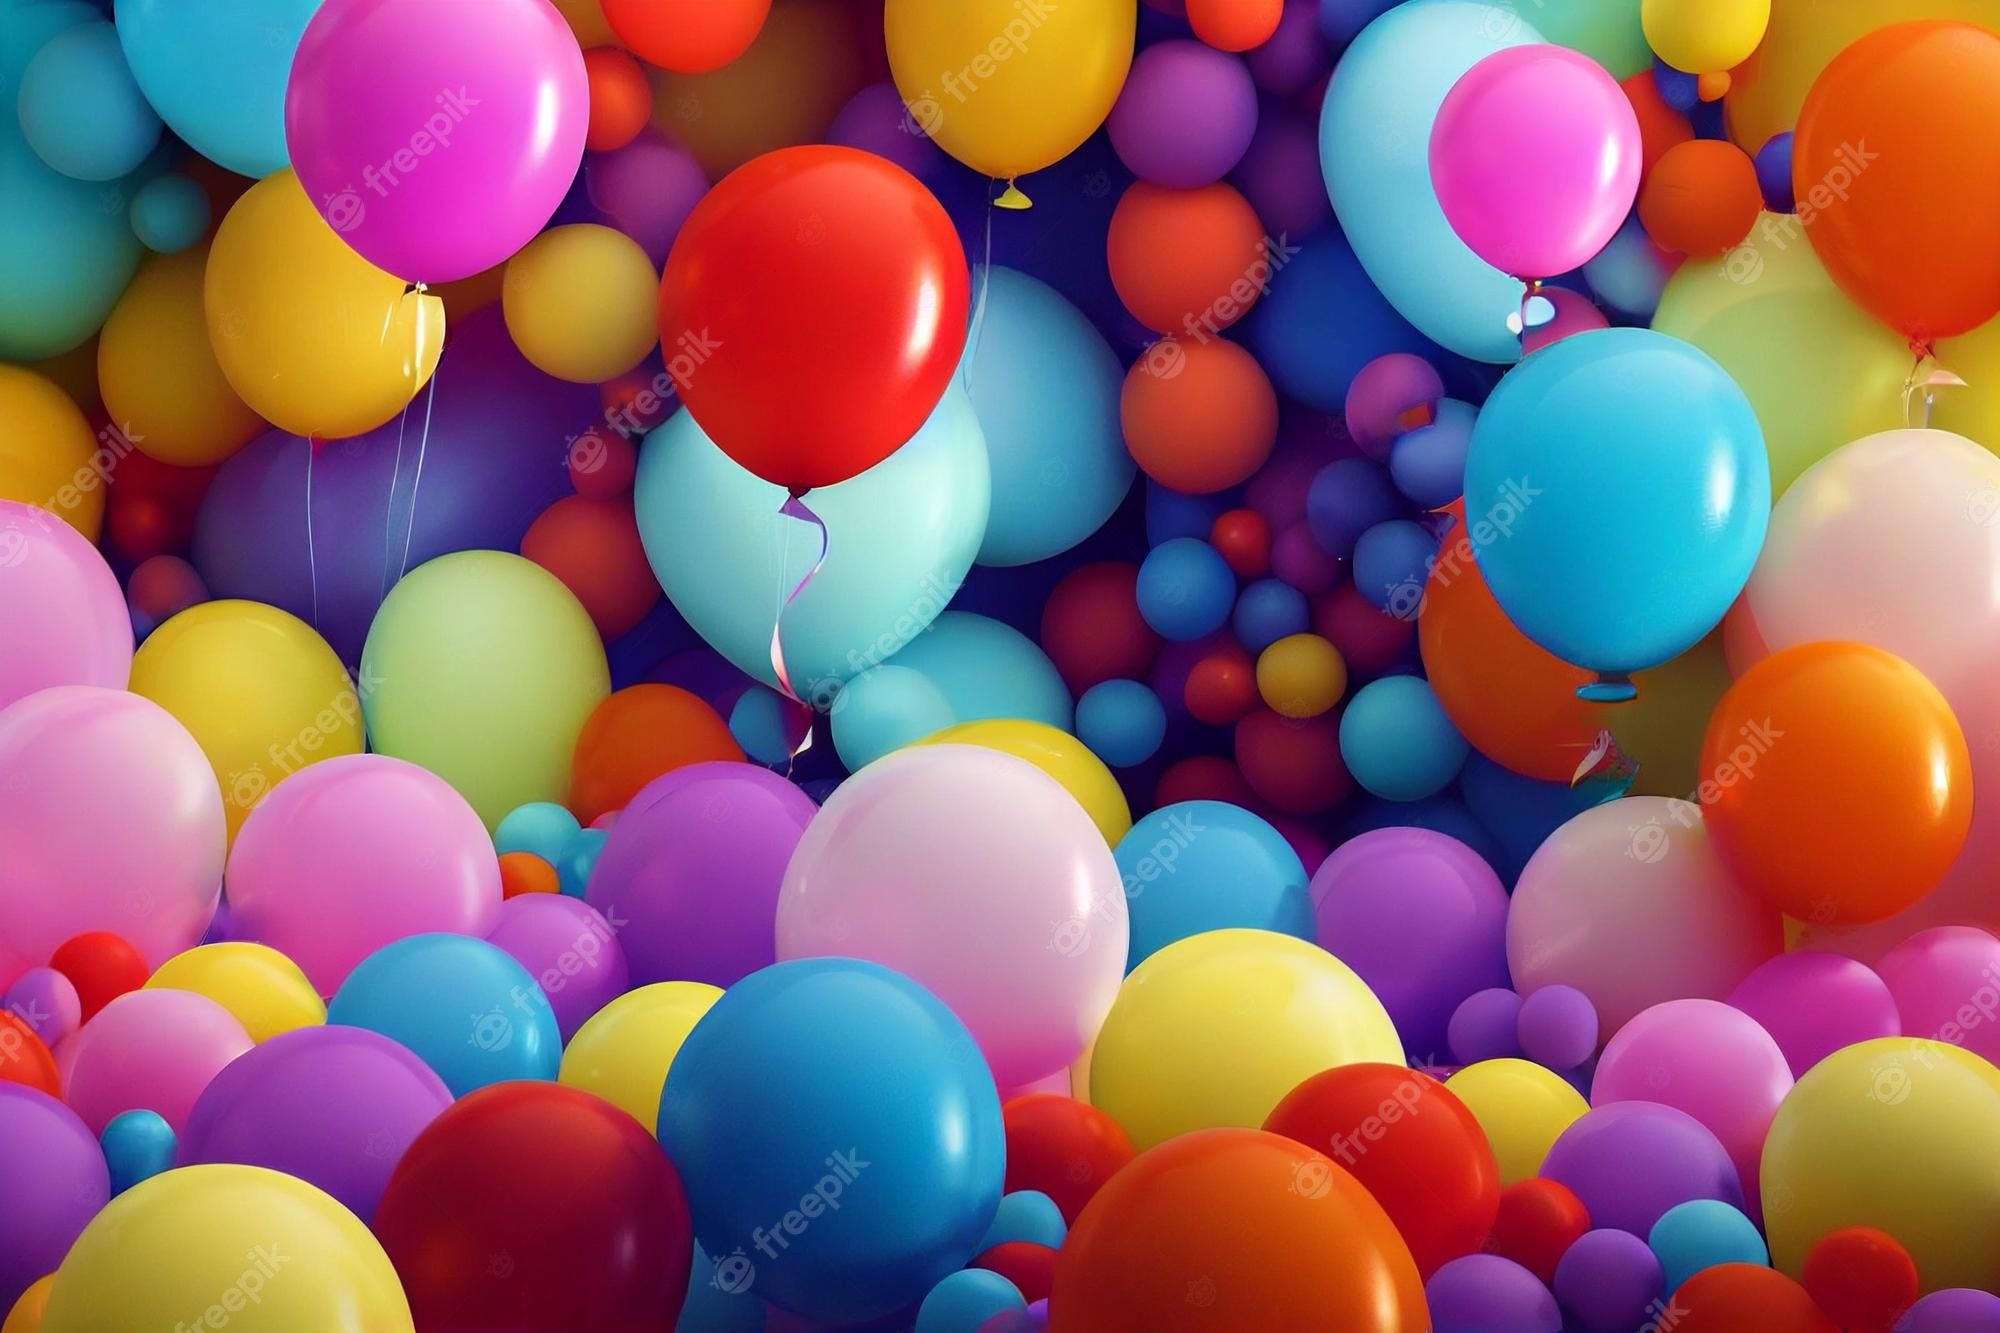 Balloon Background Image